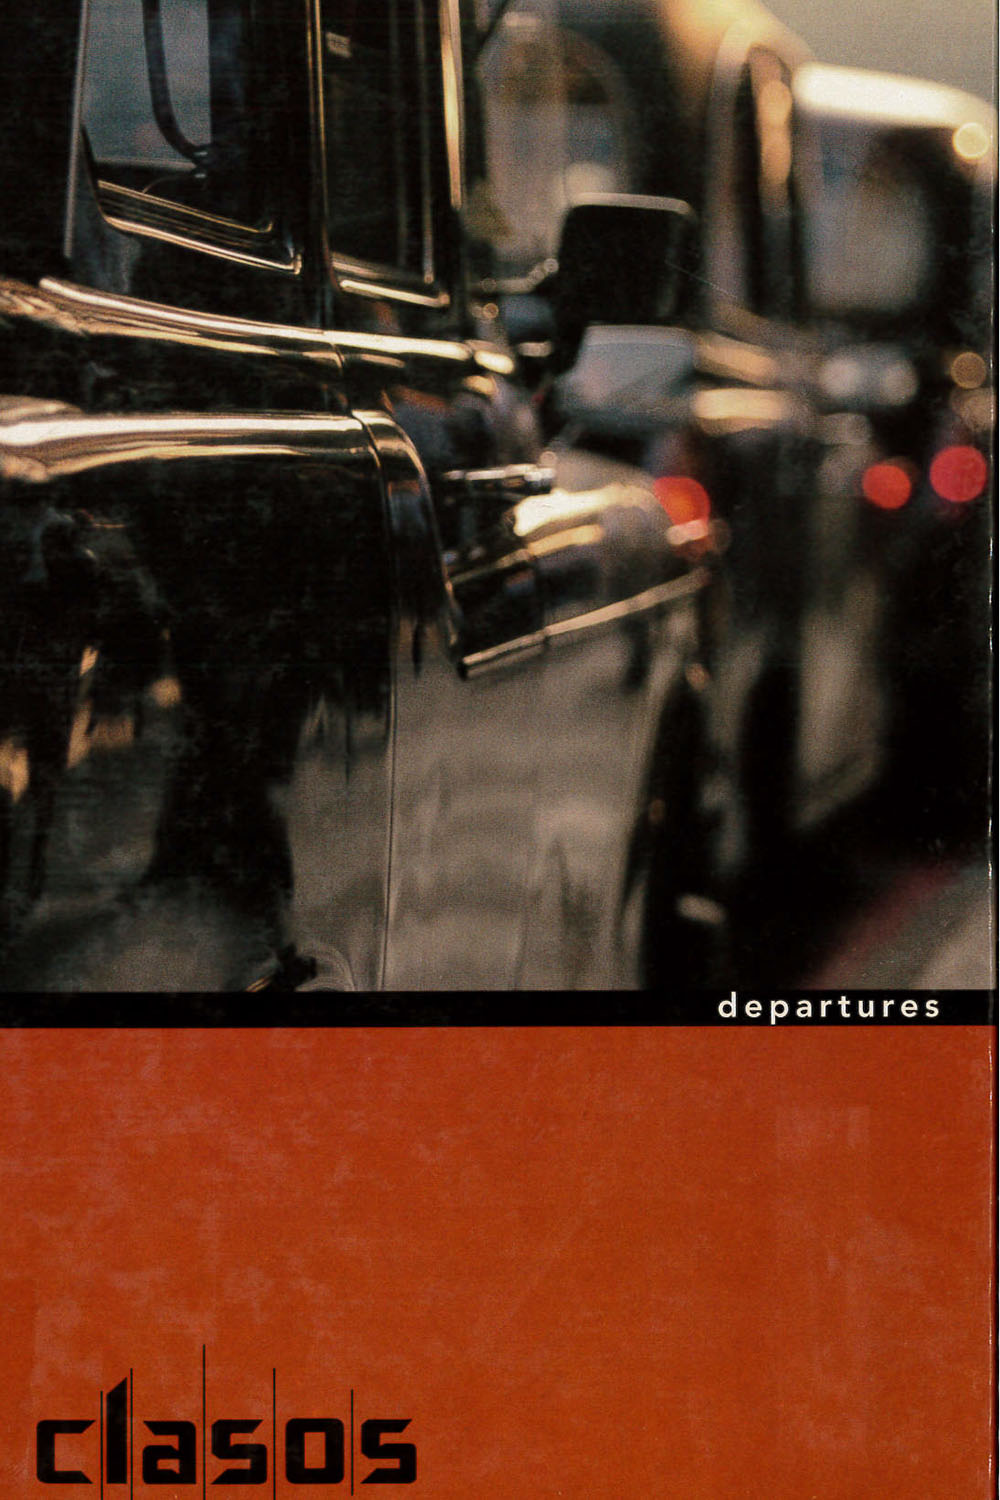 4 / 16 - N6537 N38 Departures & Arrivals
Clasos, México 2000